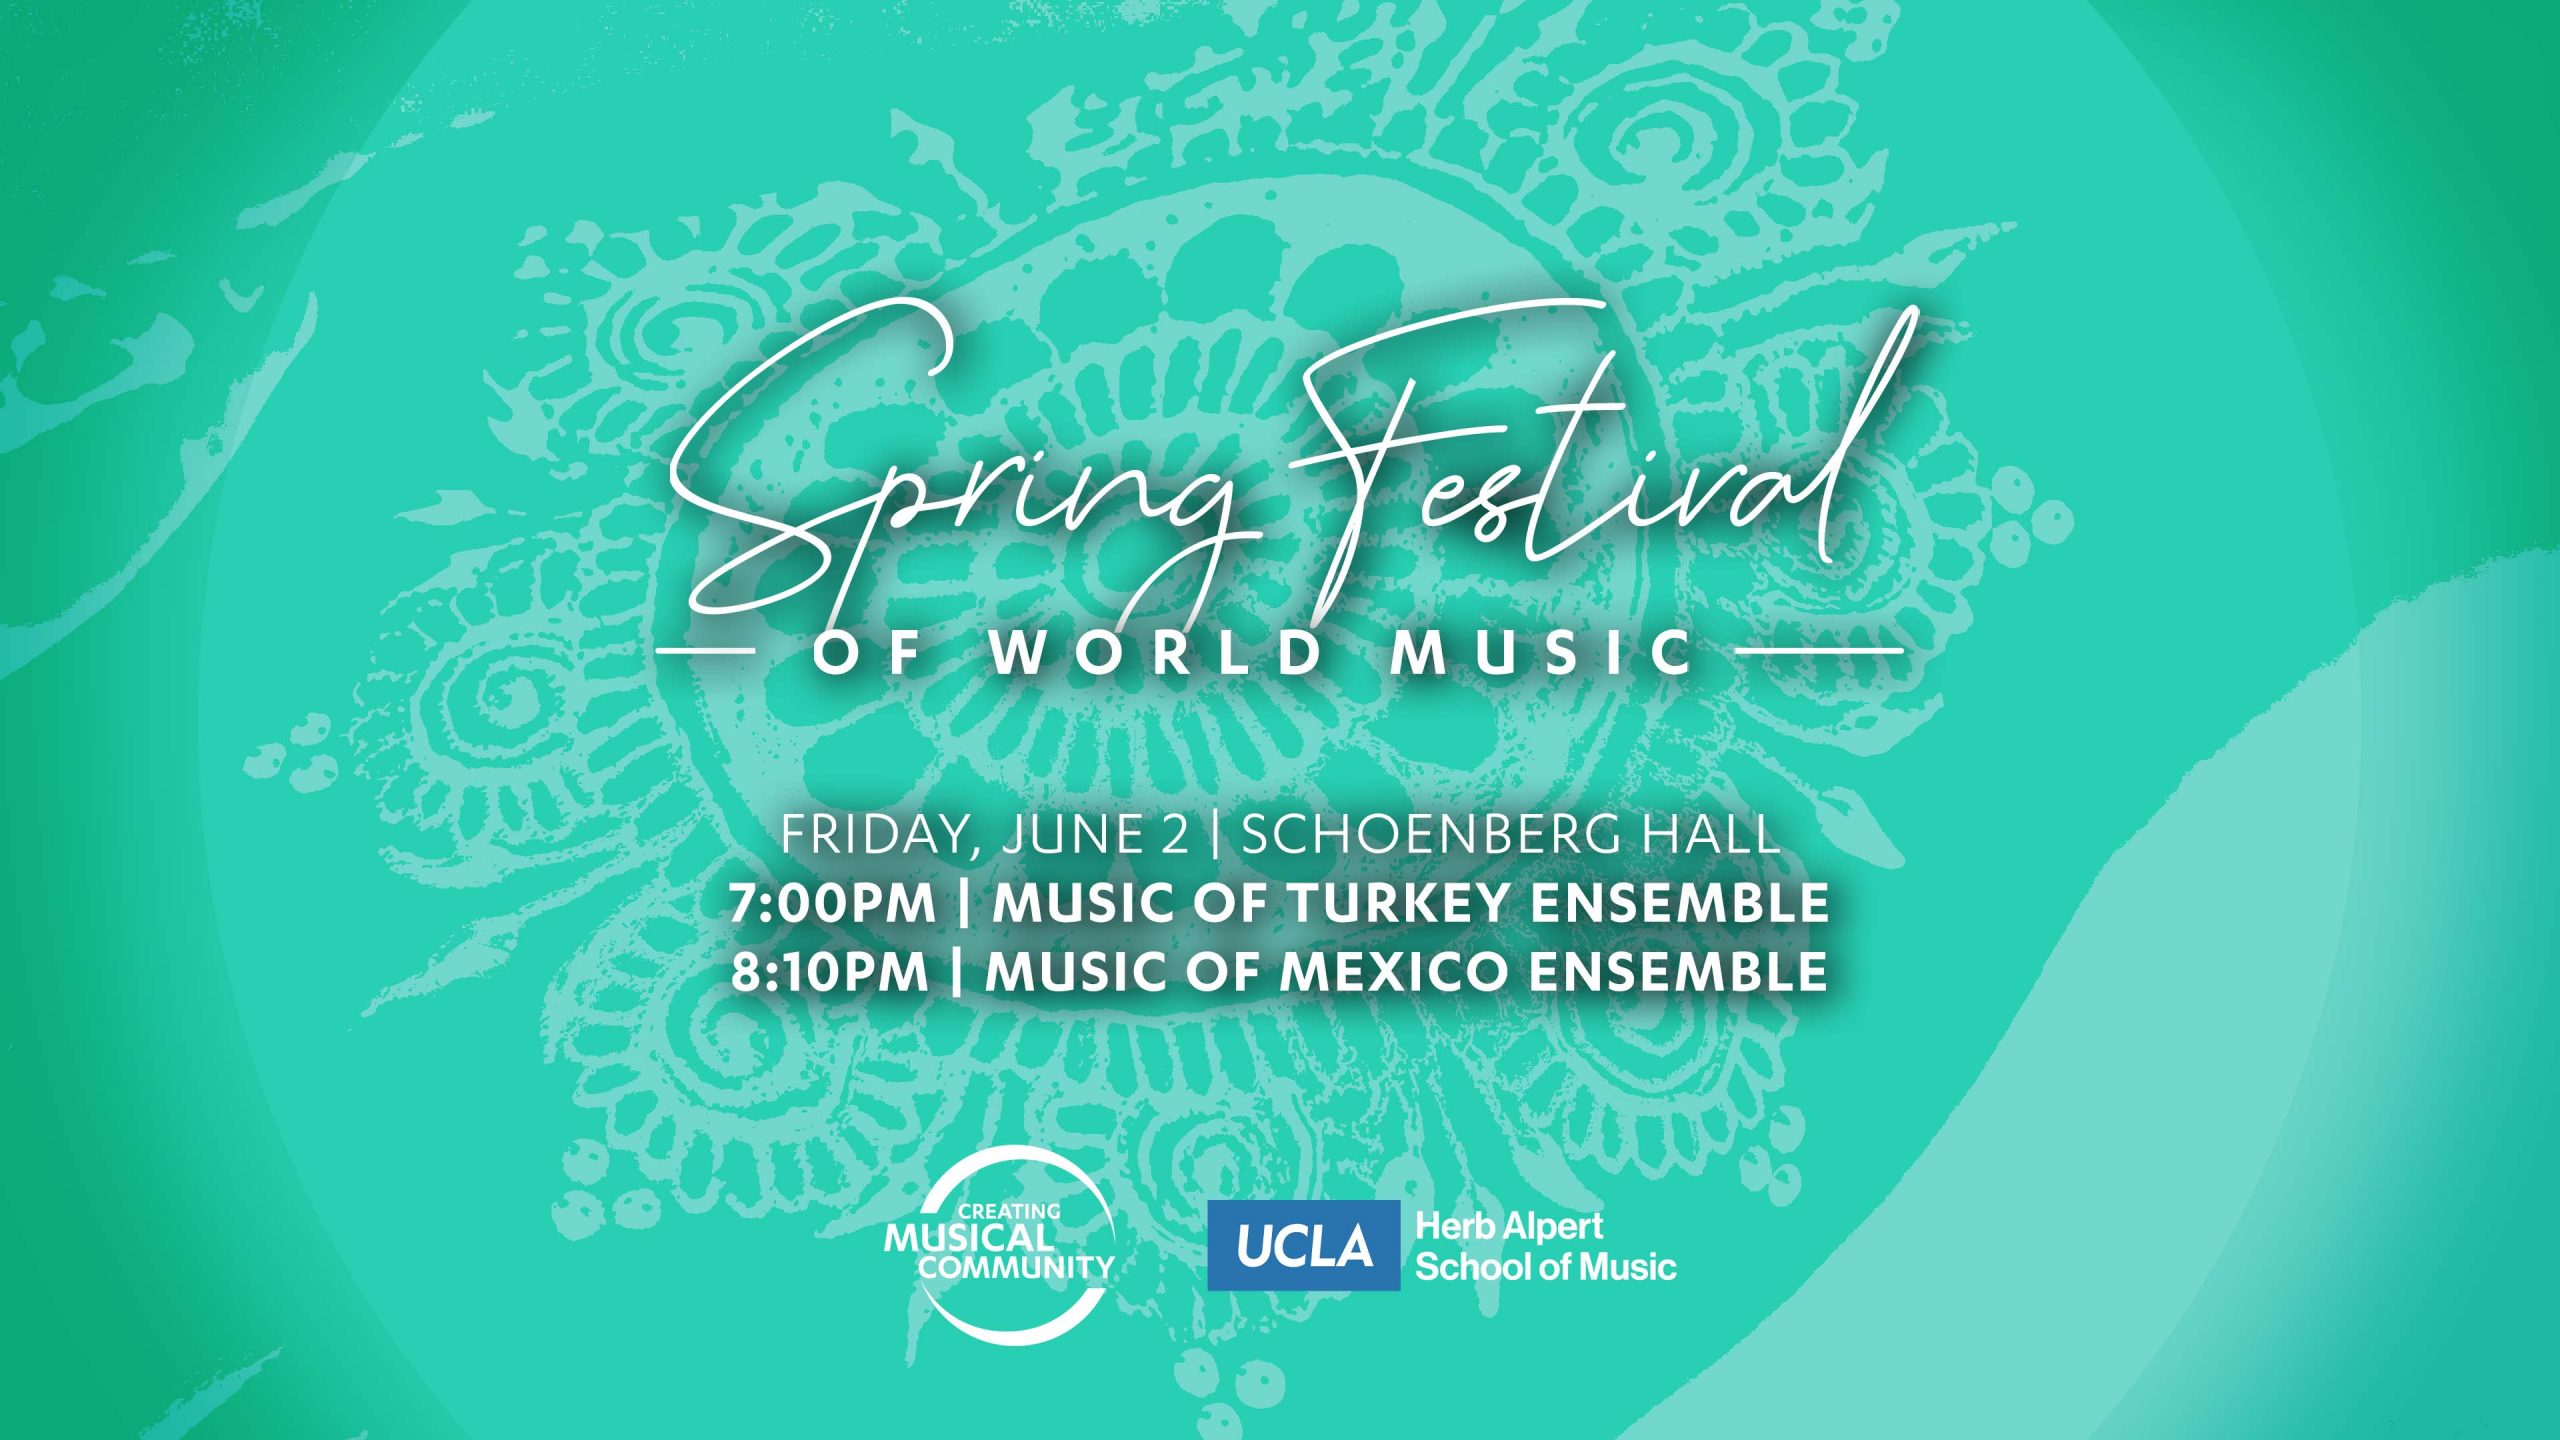 Music of Turkey Ensemble and Music of Mexico Ensemble